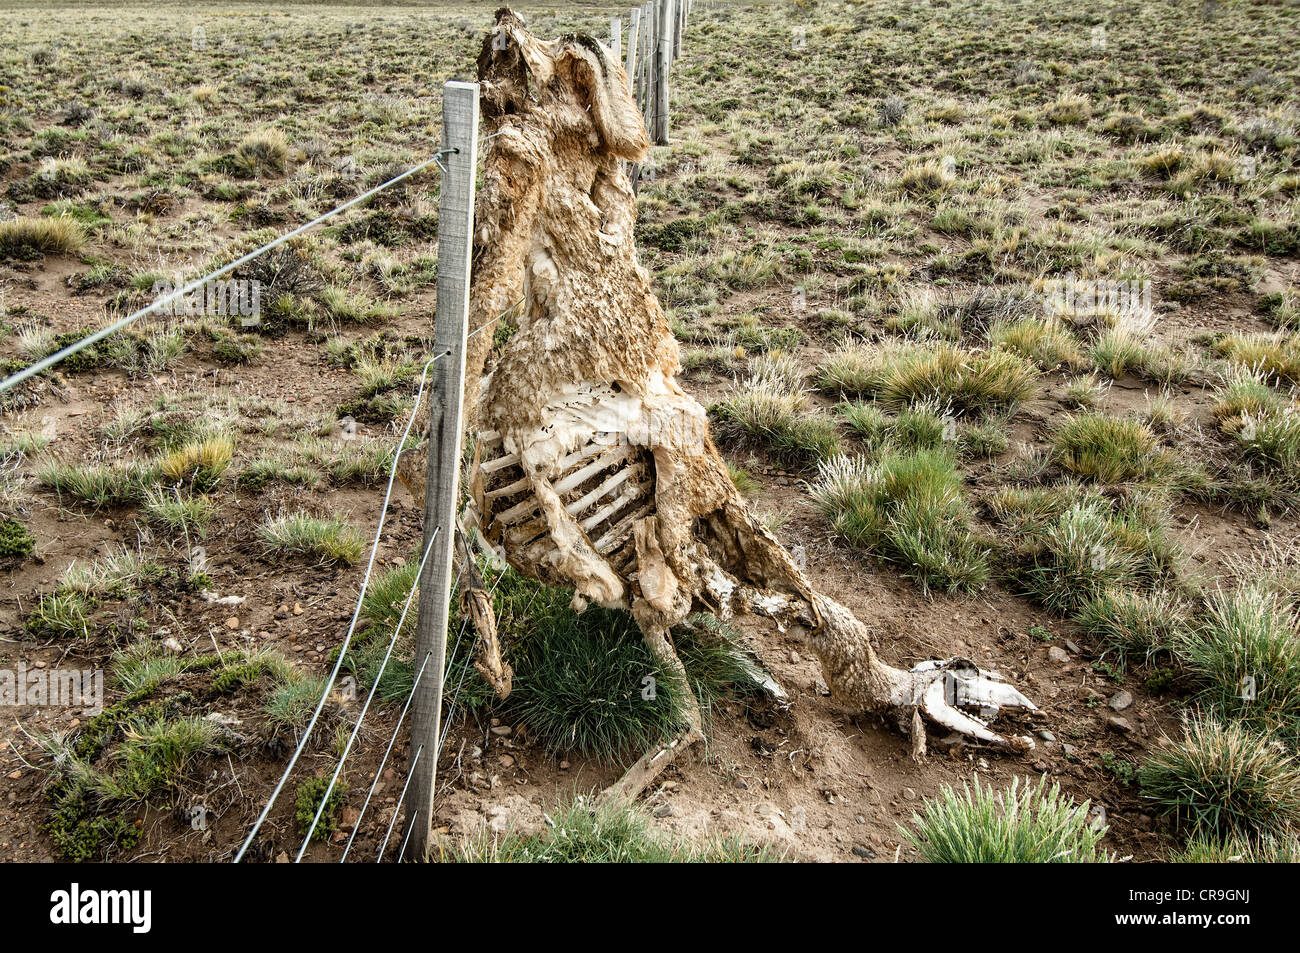 Guanako (Lama Guanicoe) tot Erwachsene Skelettreste gefangen am Drahtzaun in Steppe Santa Cruz Provinz Patagonien Argentinien Stockfoto